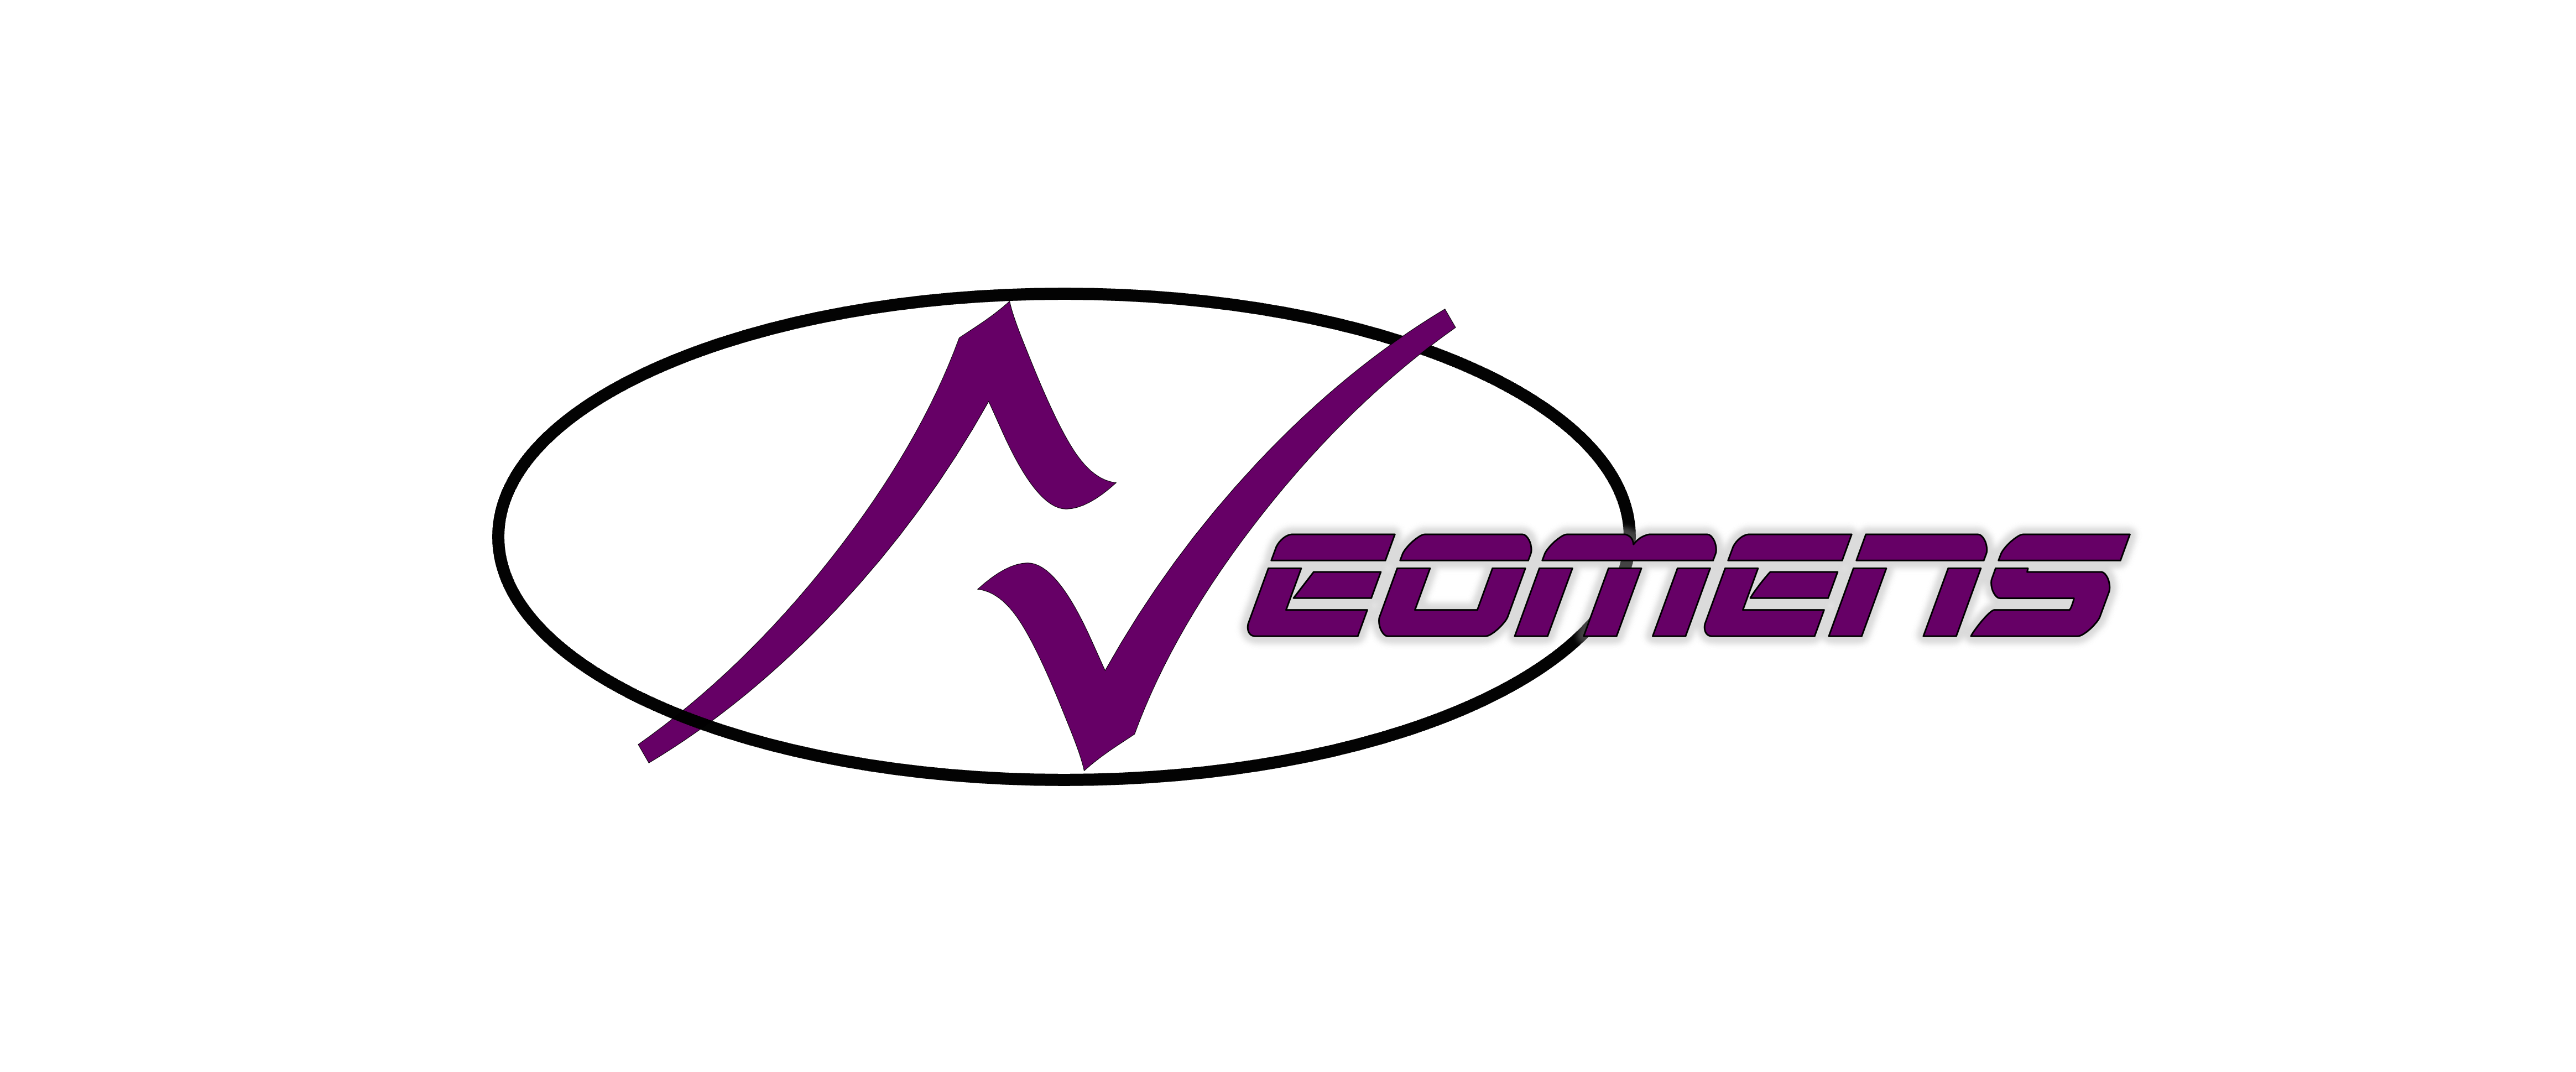 neomens-formation Logo